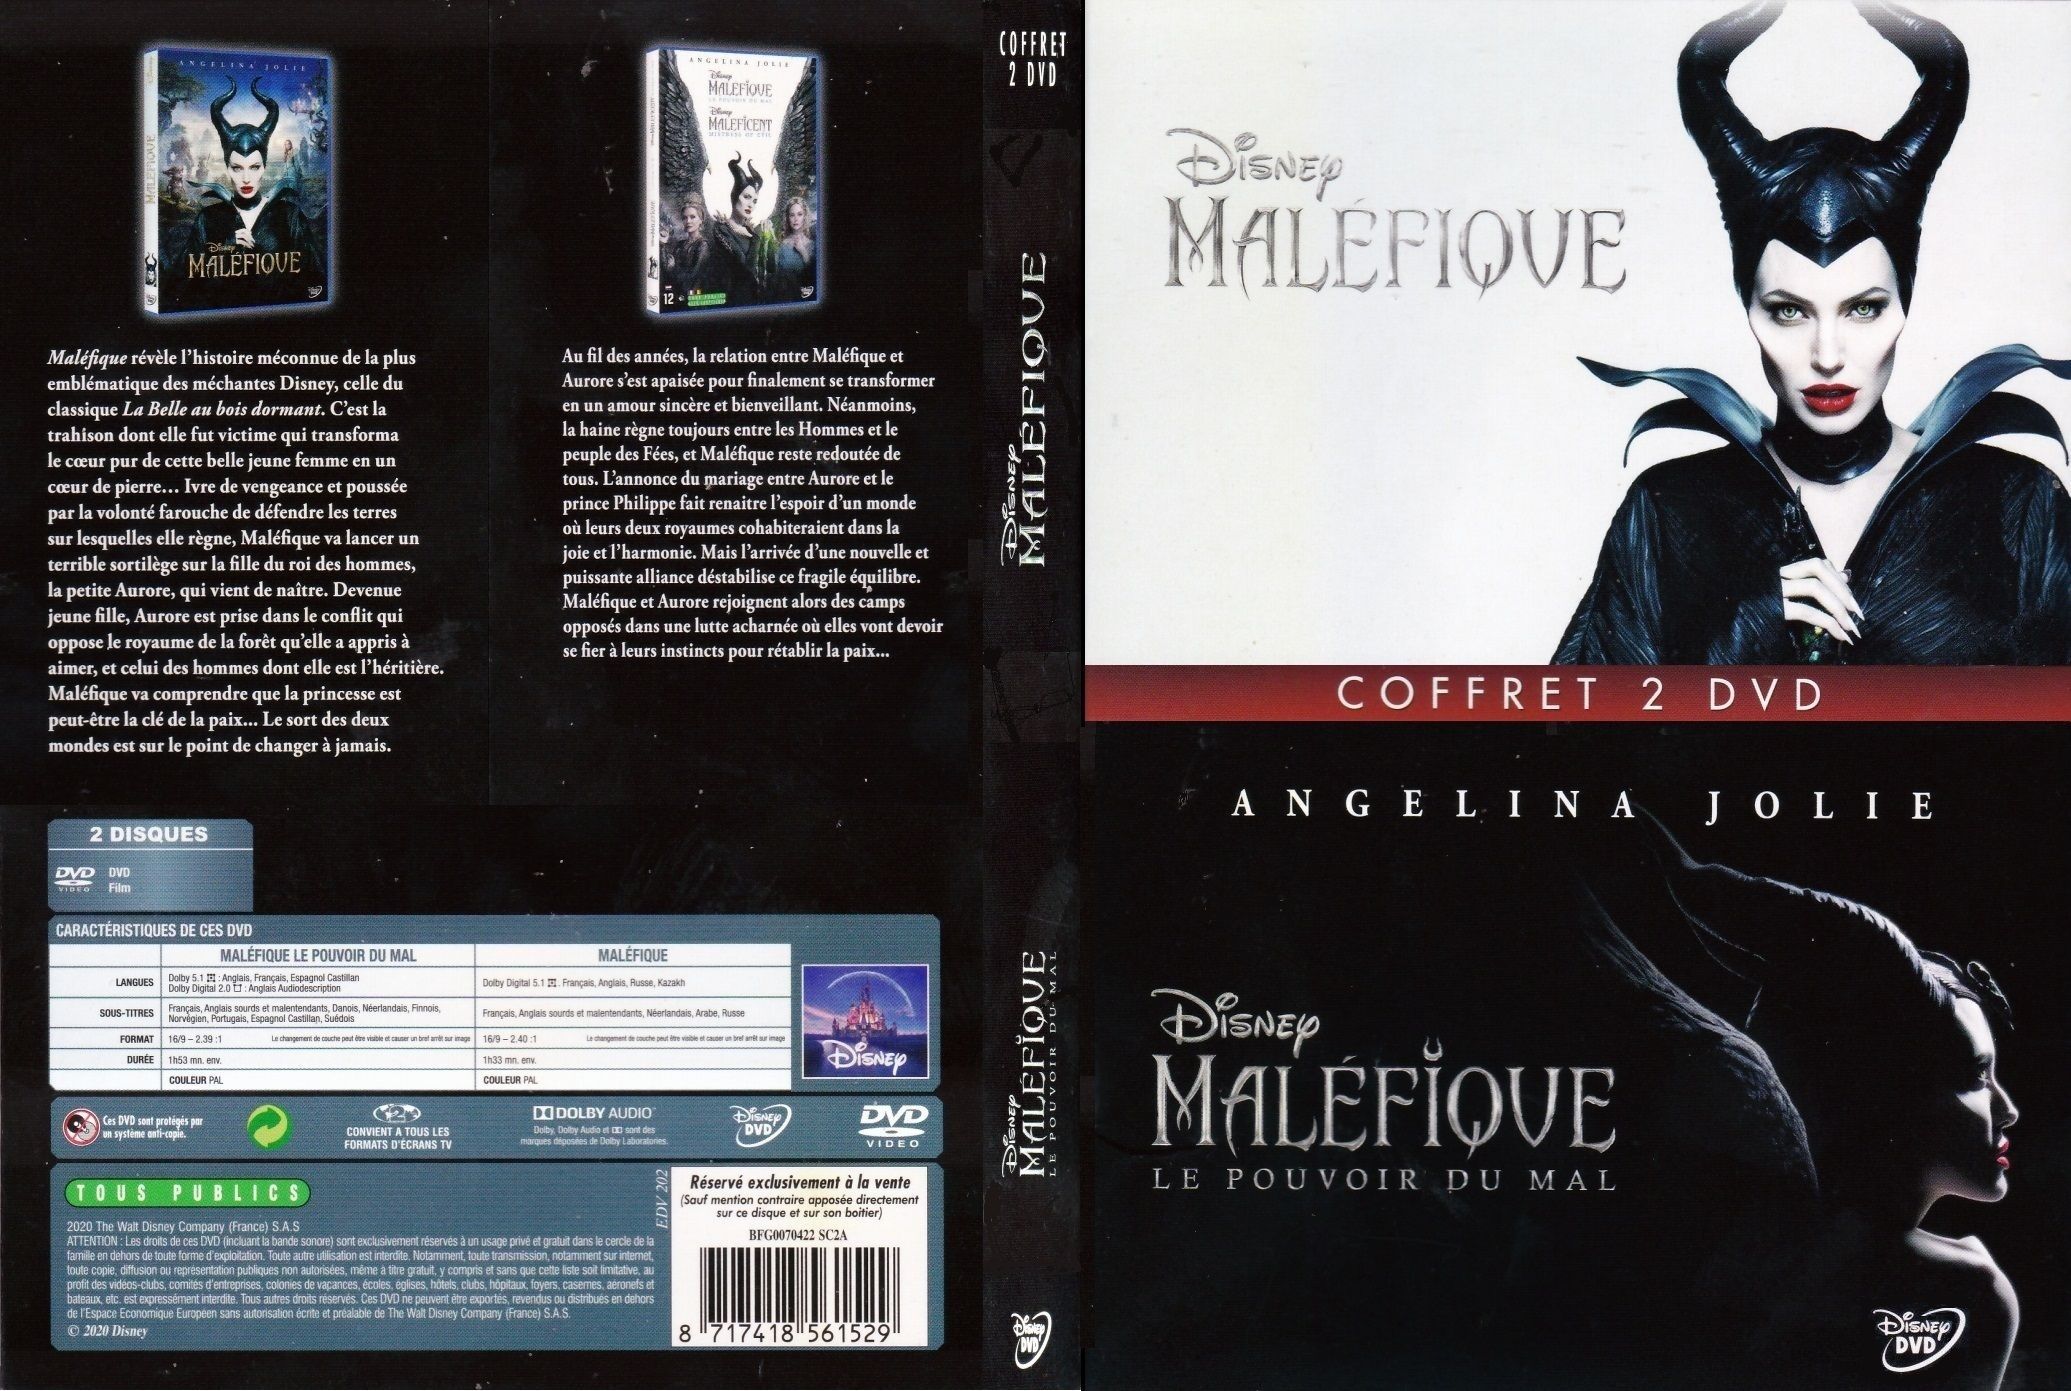 Jaquette DVD Malefique 1 & 2 custom 